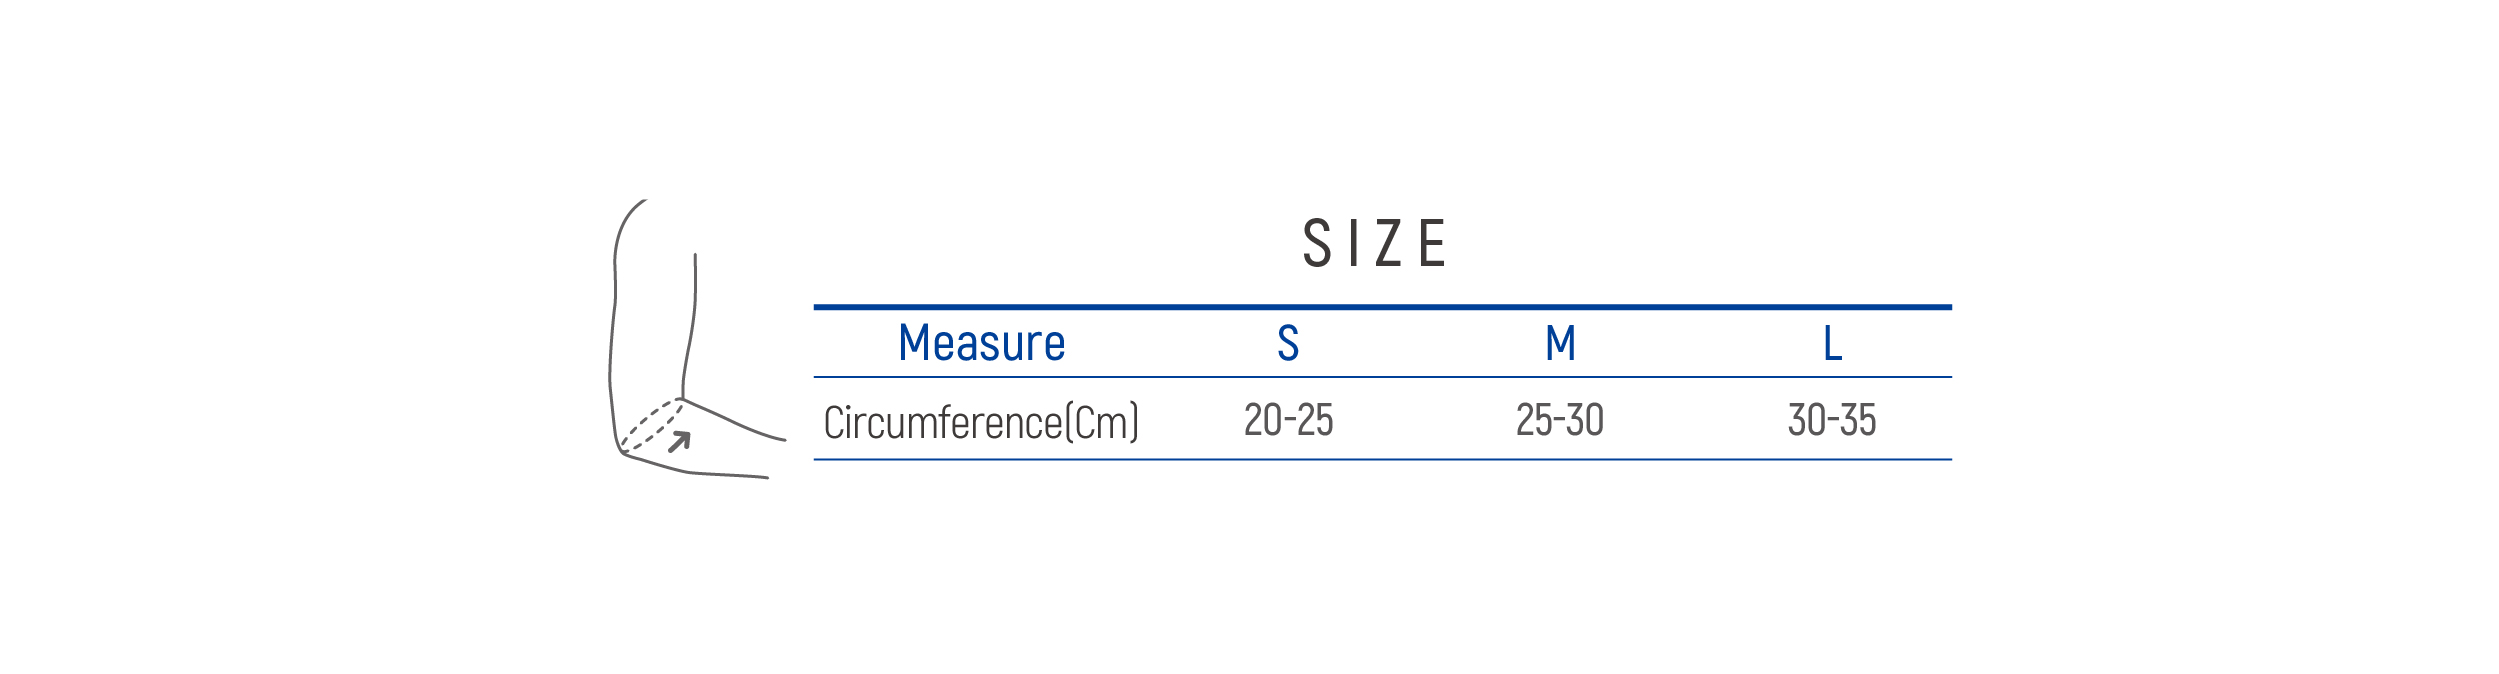 DR-E009 Size table image